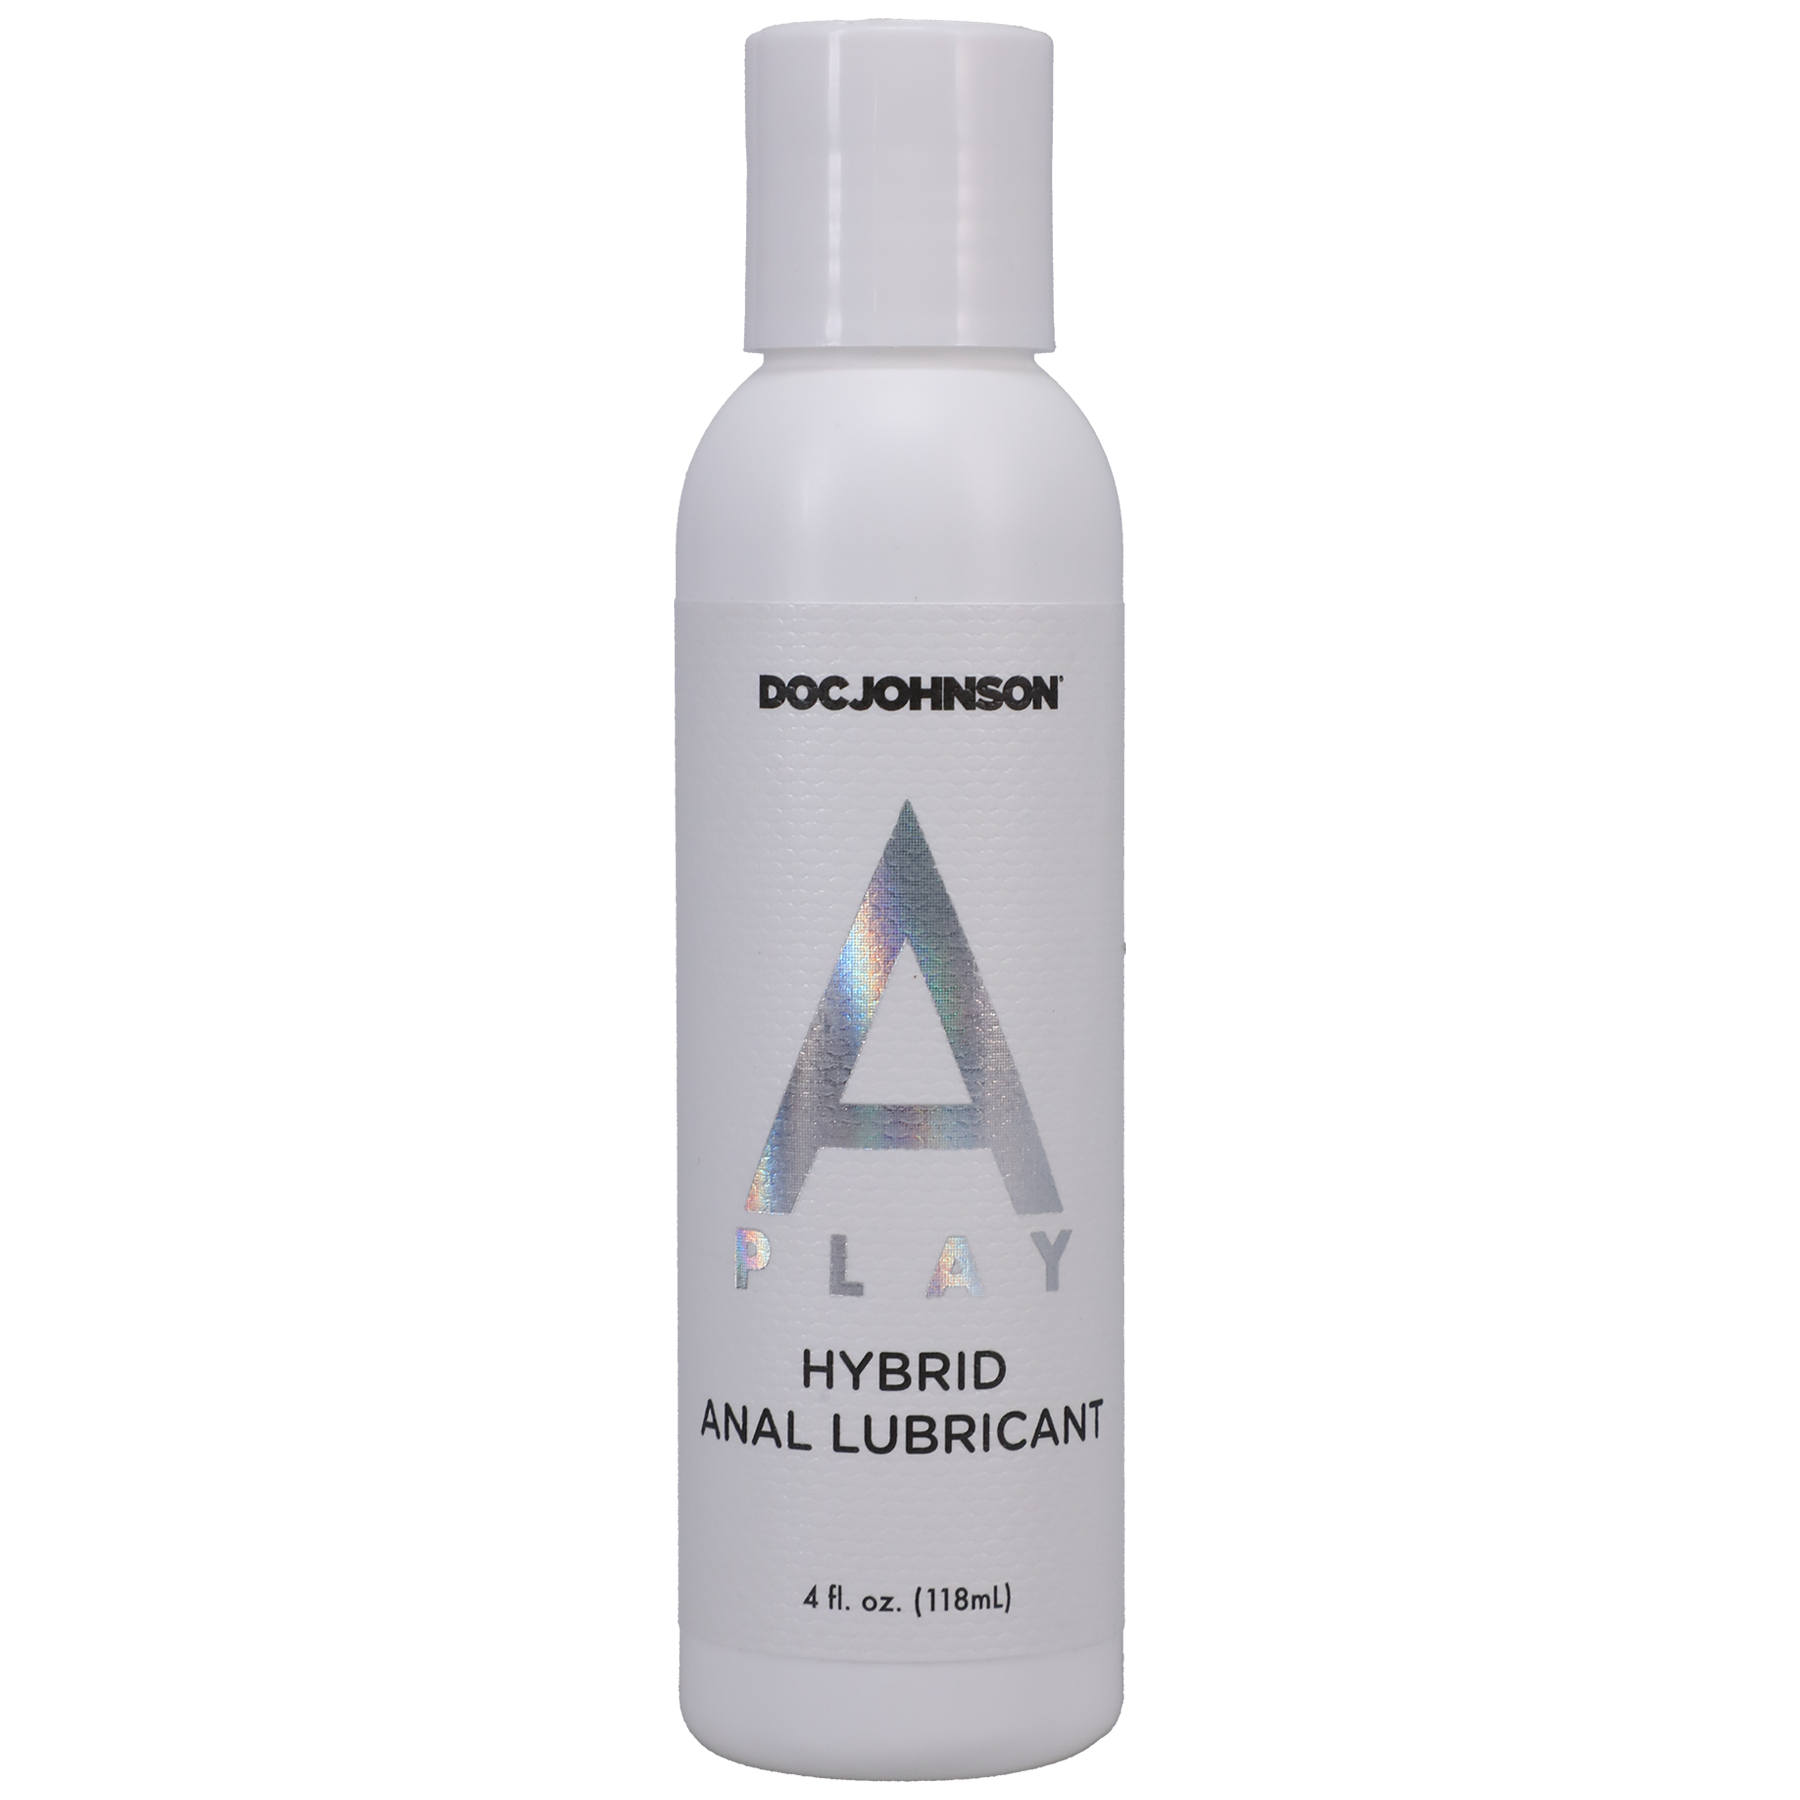 A-Play Hybrid Anal • Hybrid (Silicone + Water) Lubricant